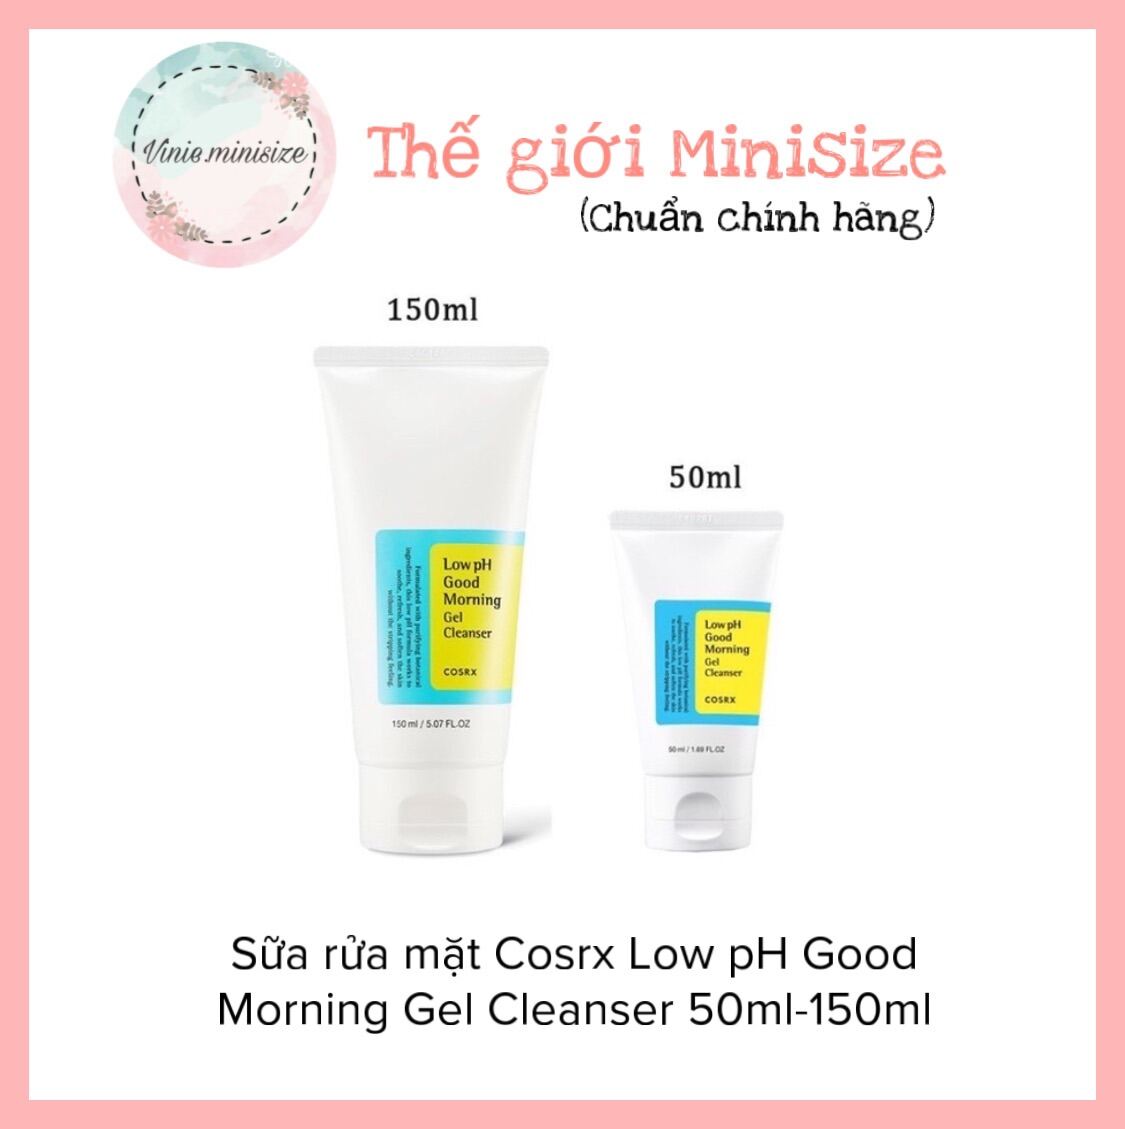 Sữa rửa mặt Cosrx Low pH Good Morning Gel Cleanser 150ml - 50ml | Vinie.minisize